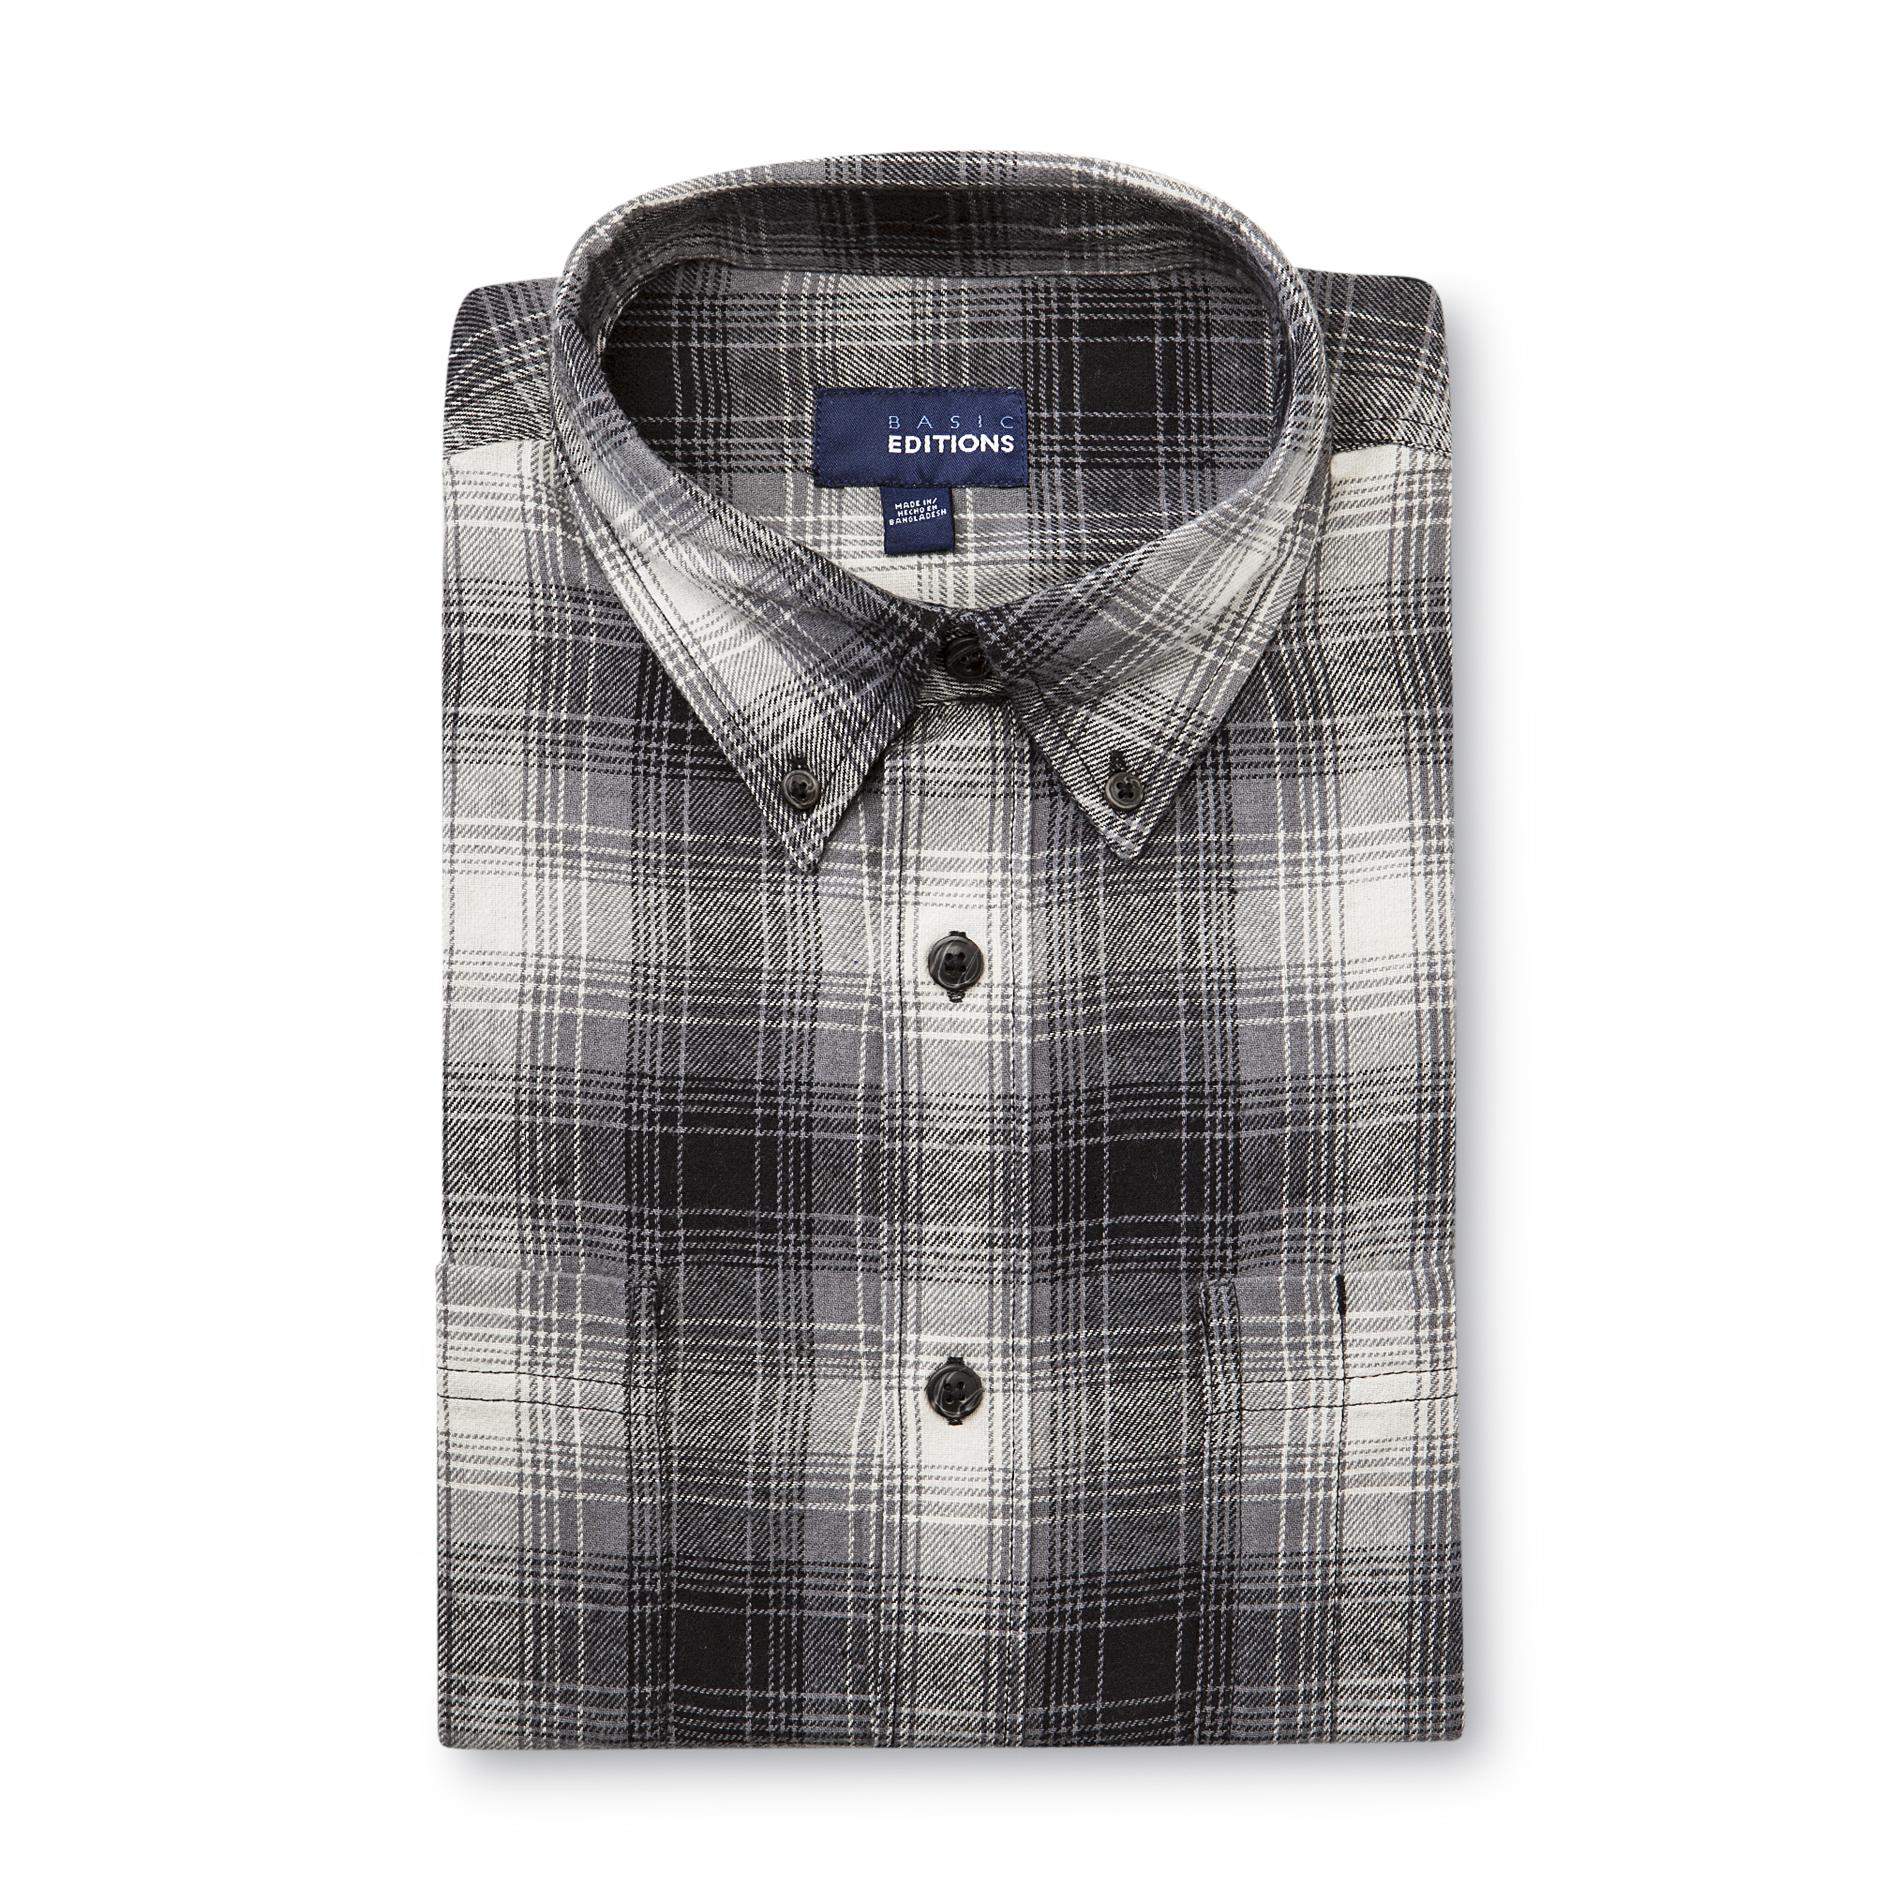 Basic Editions Men's Flannel Shirt - Plaid